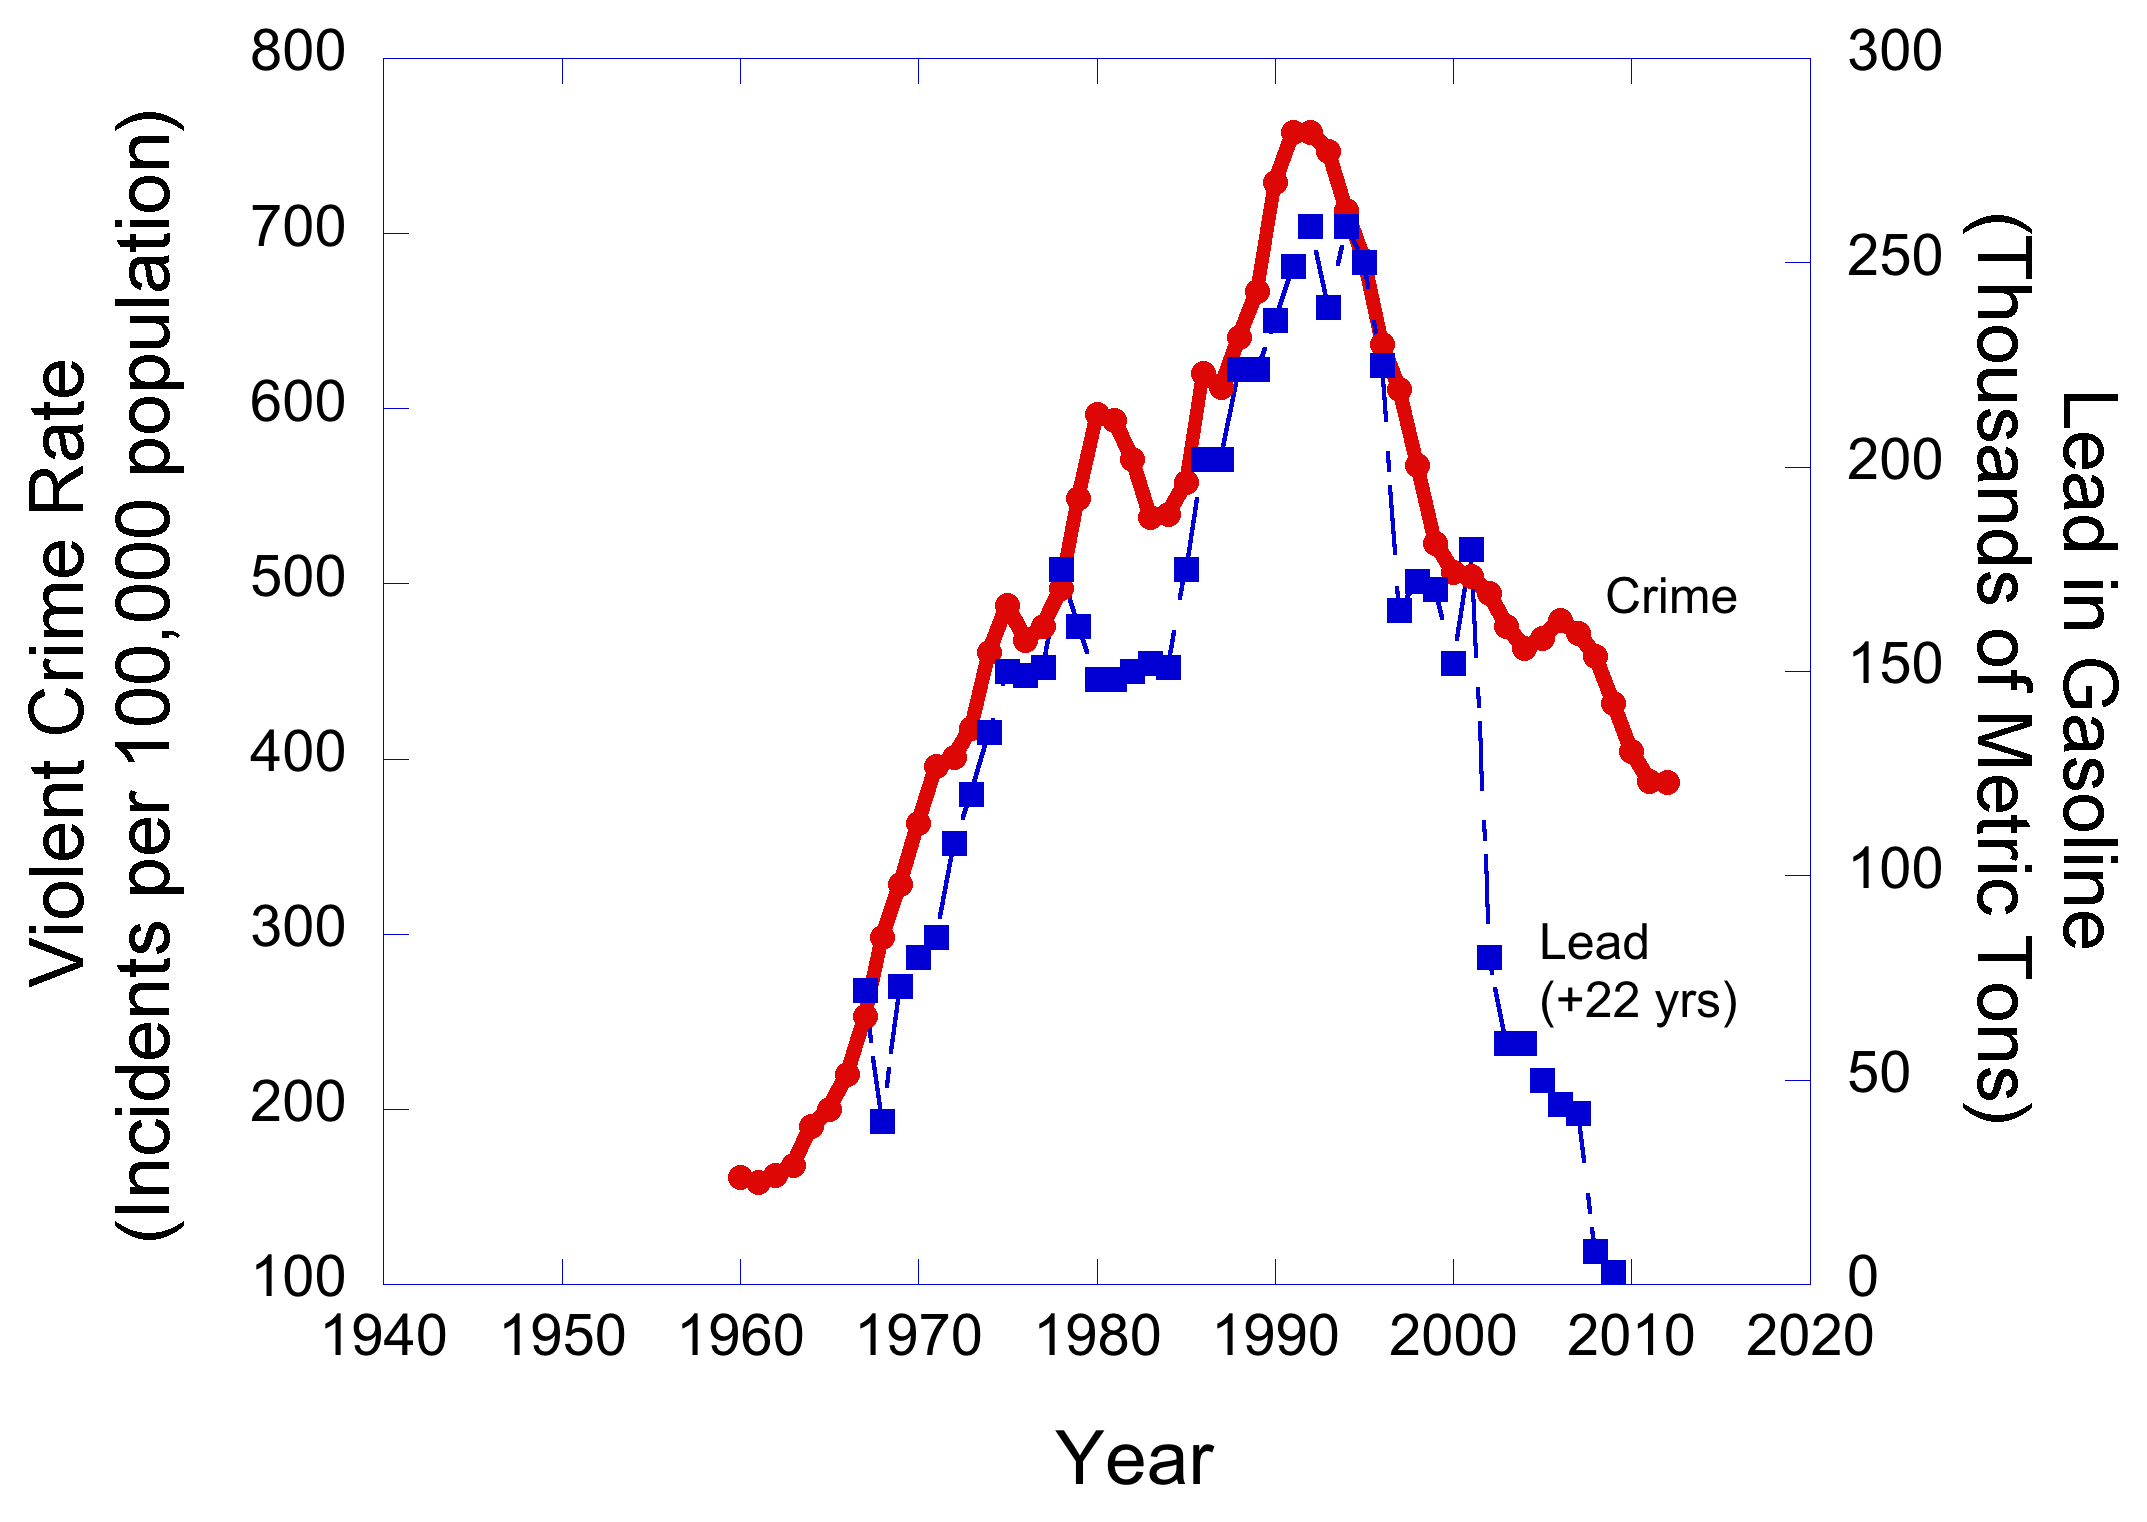 Crime vs Lead = 22 years